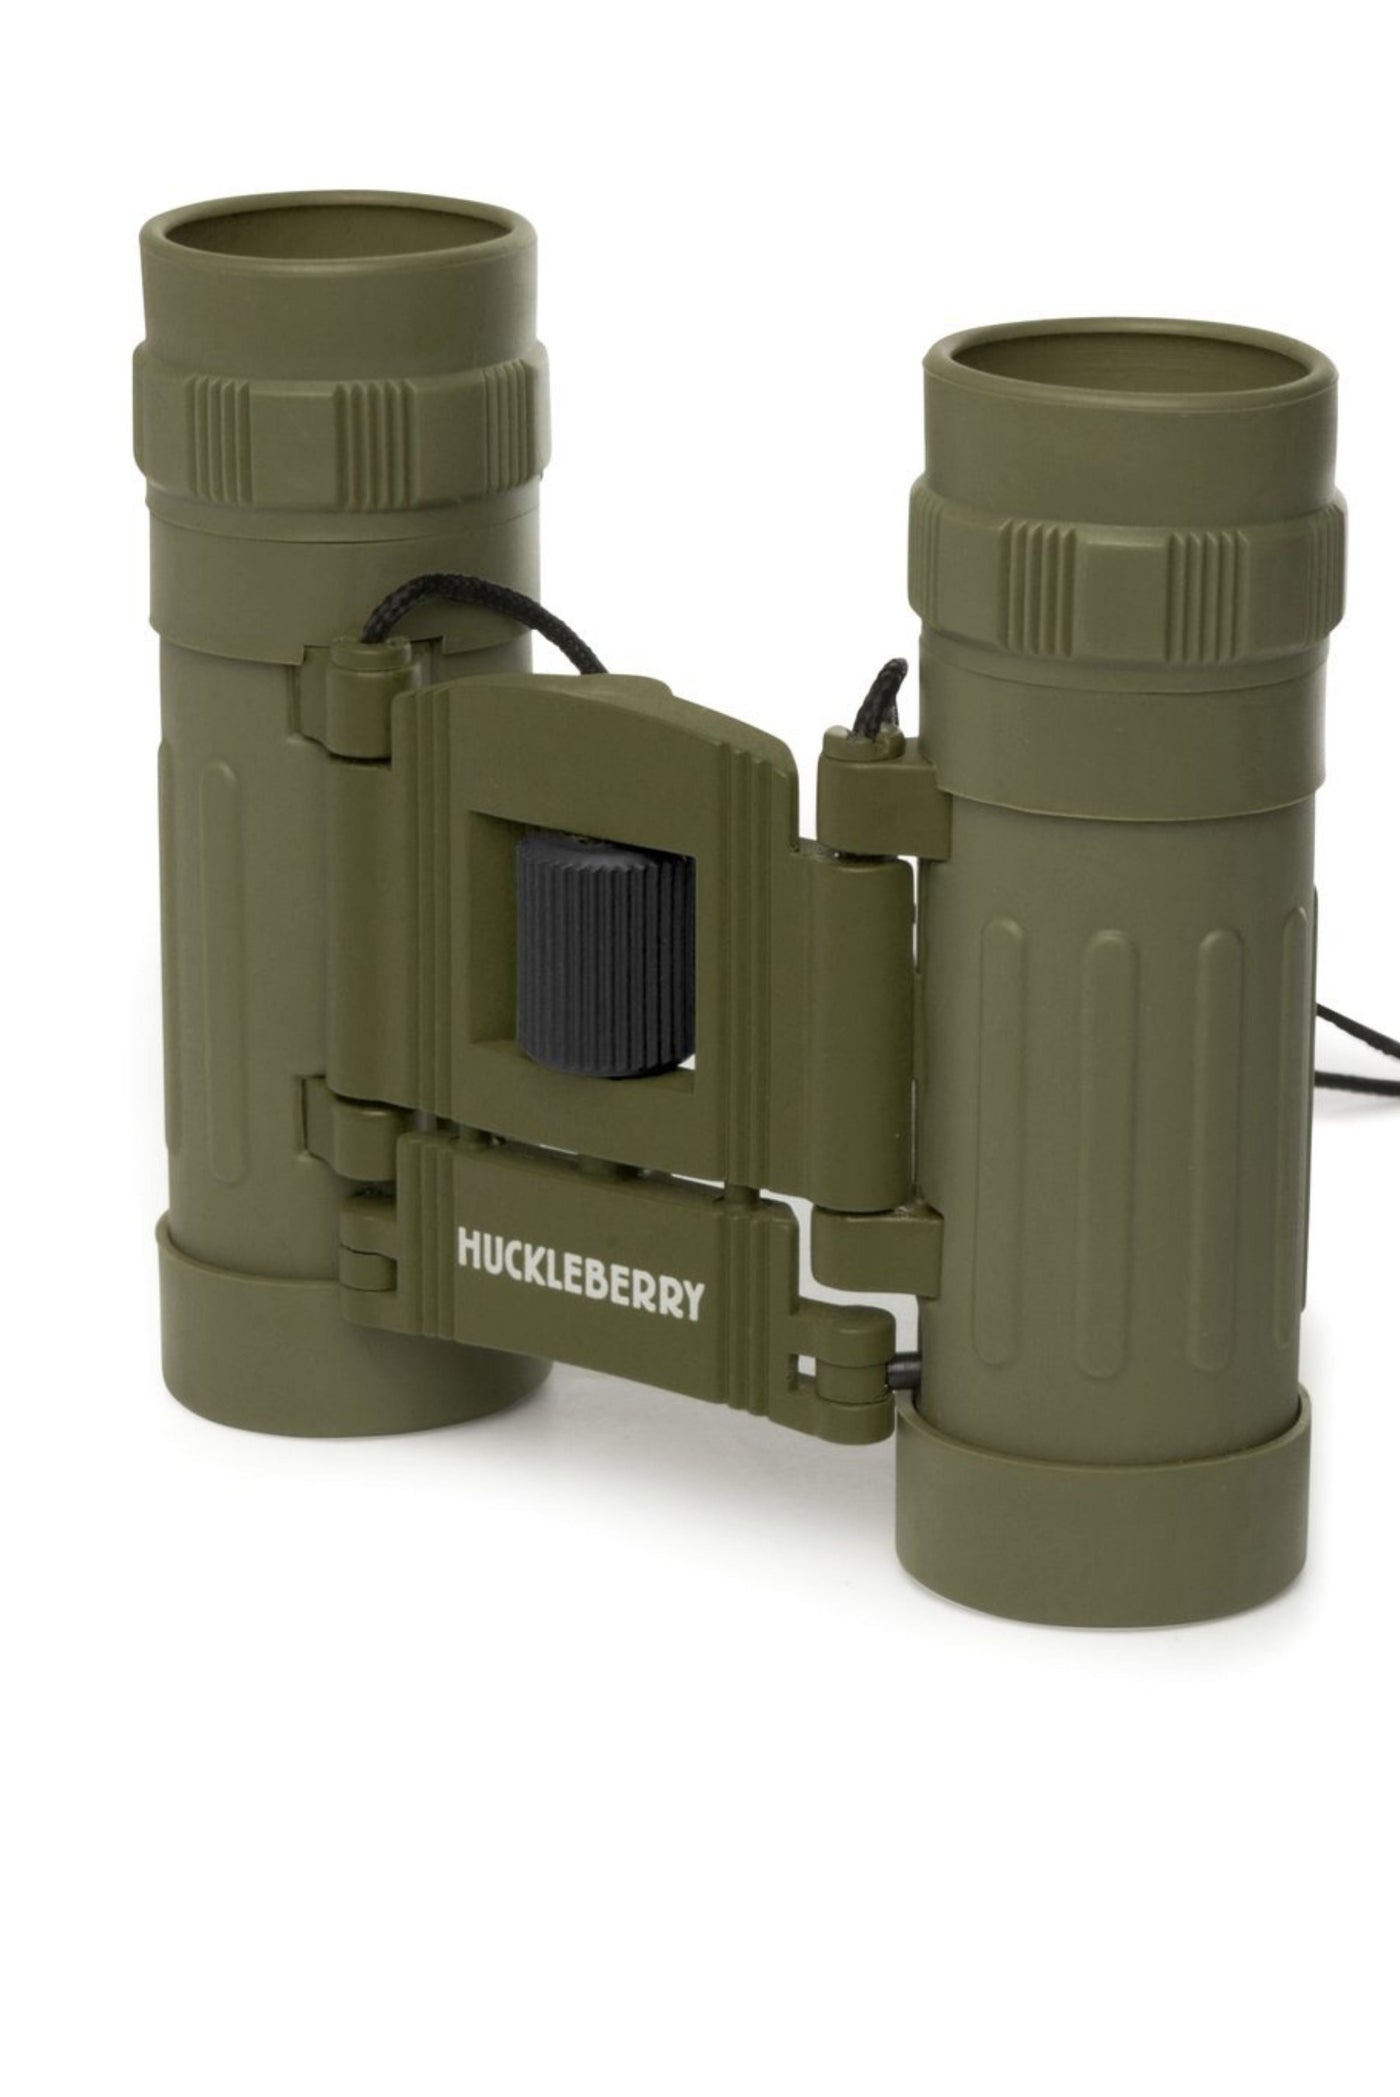 Kikkerland Huckleberry Binoculars-Accessories-Ohh! By Gum - Shop Sustainable